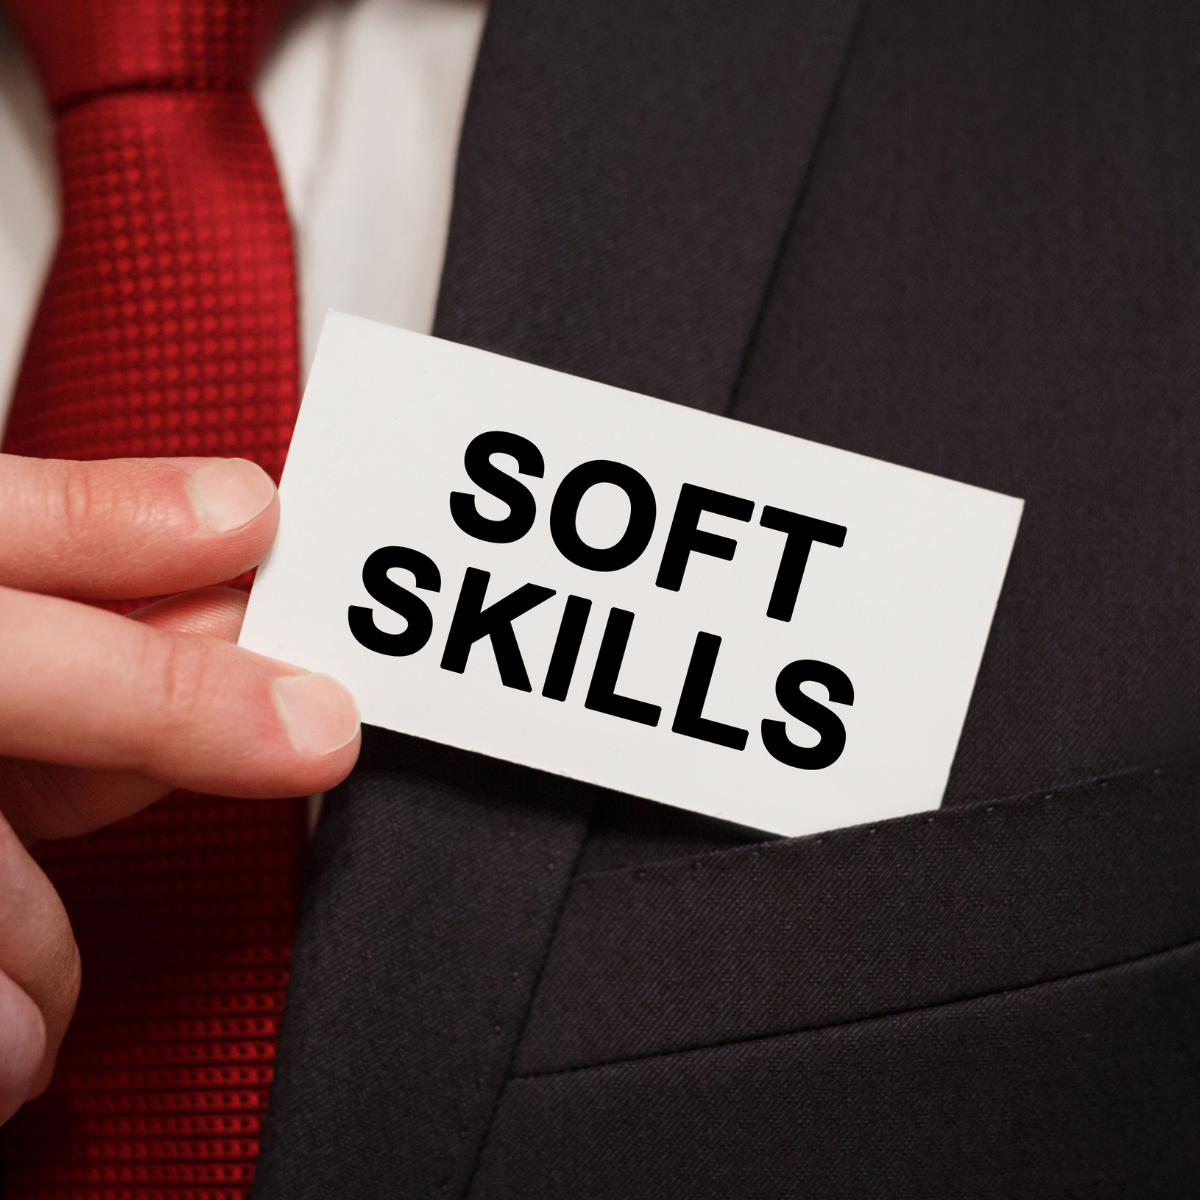 Mentoring improves soft skills - workplace development